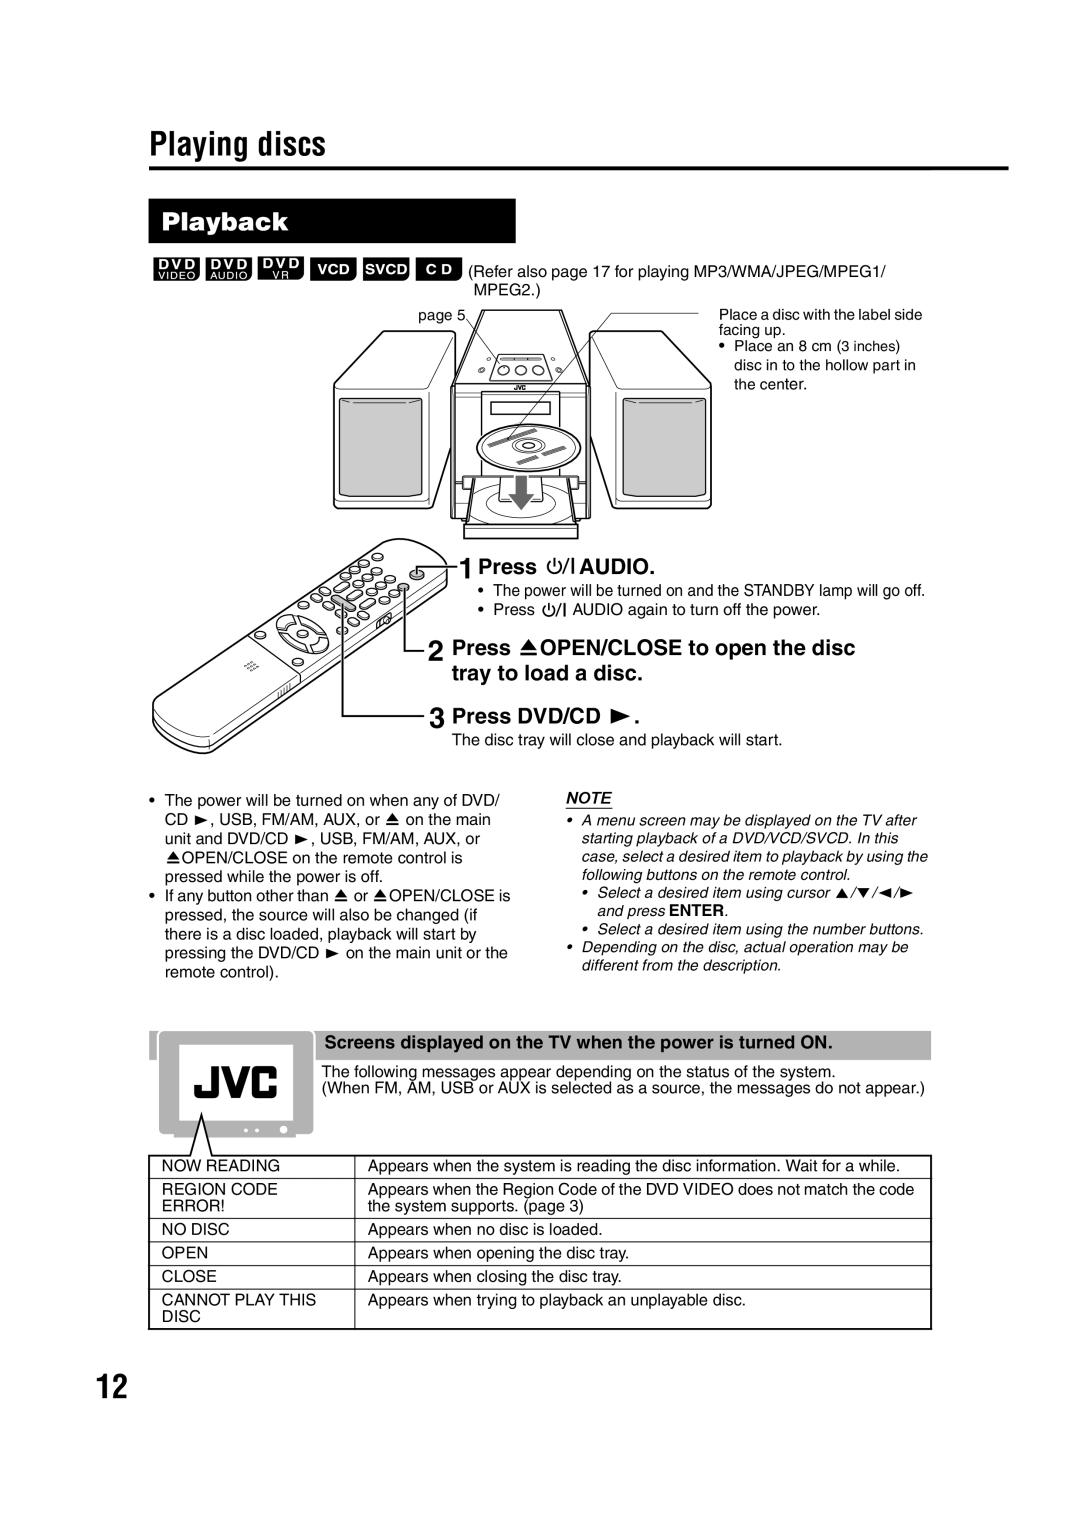 JVC EX-D11 manual Playing discs, Playback, Press AUDIO, Press DVD/CD 